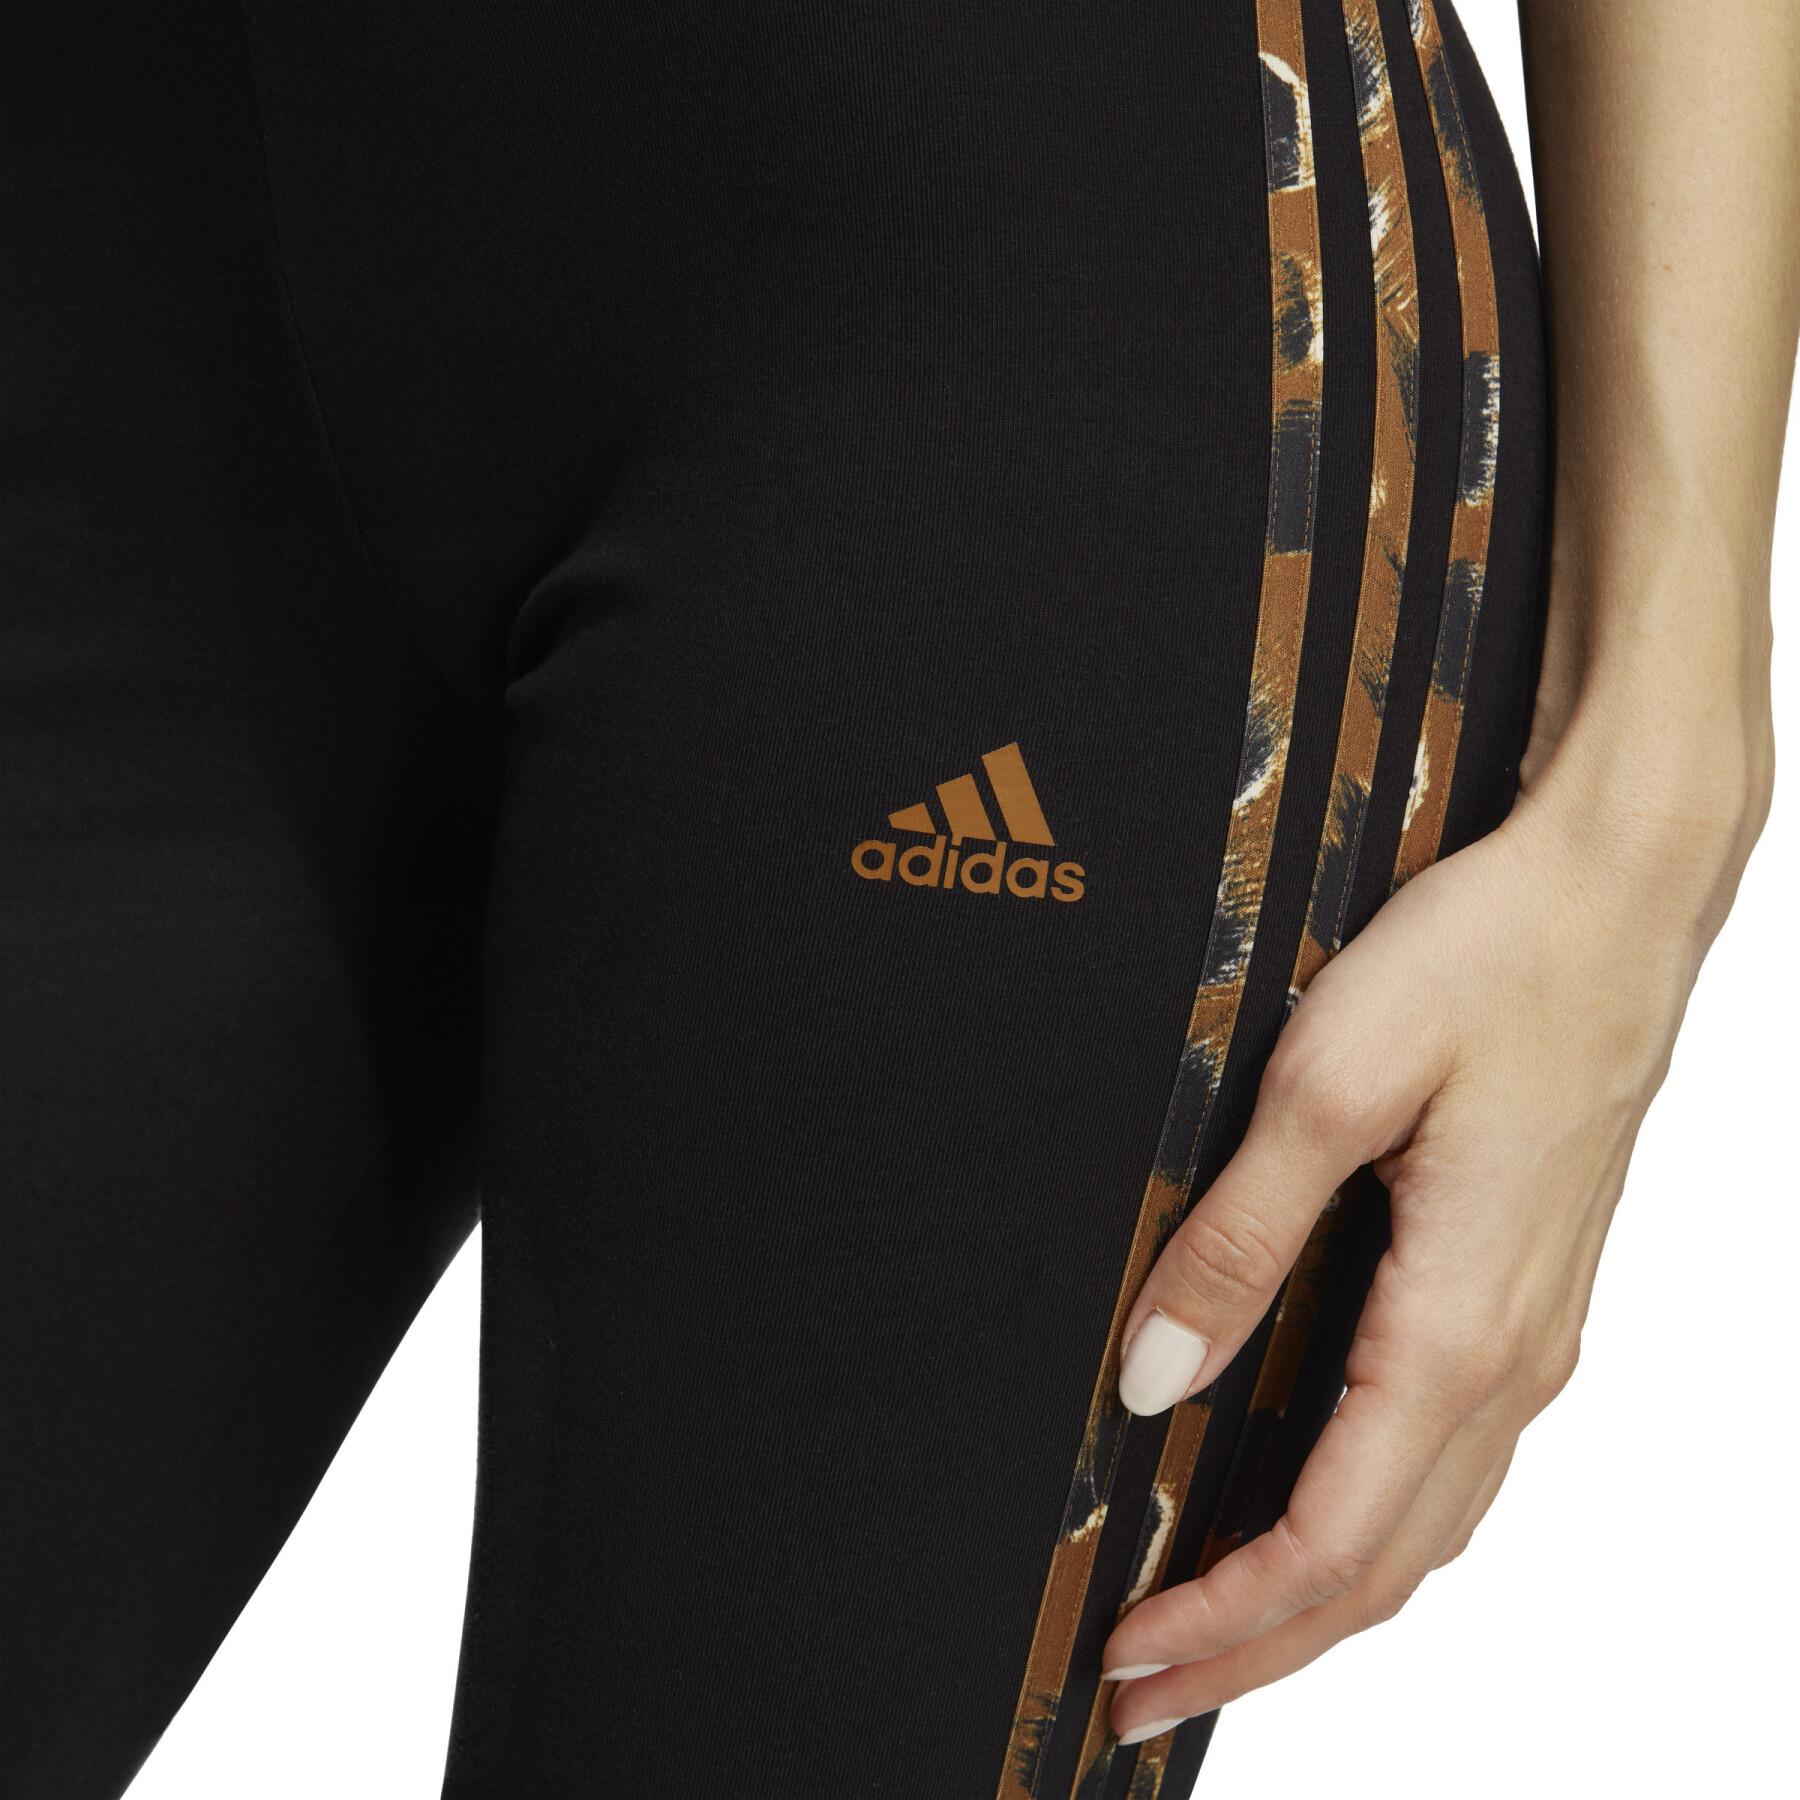 Animal print leggings for women adidas Essentials 3-Stripes